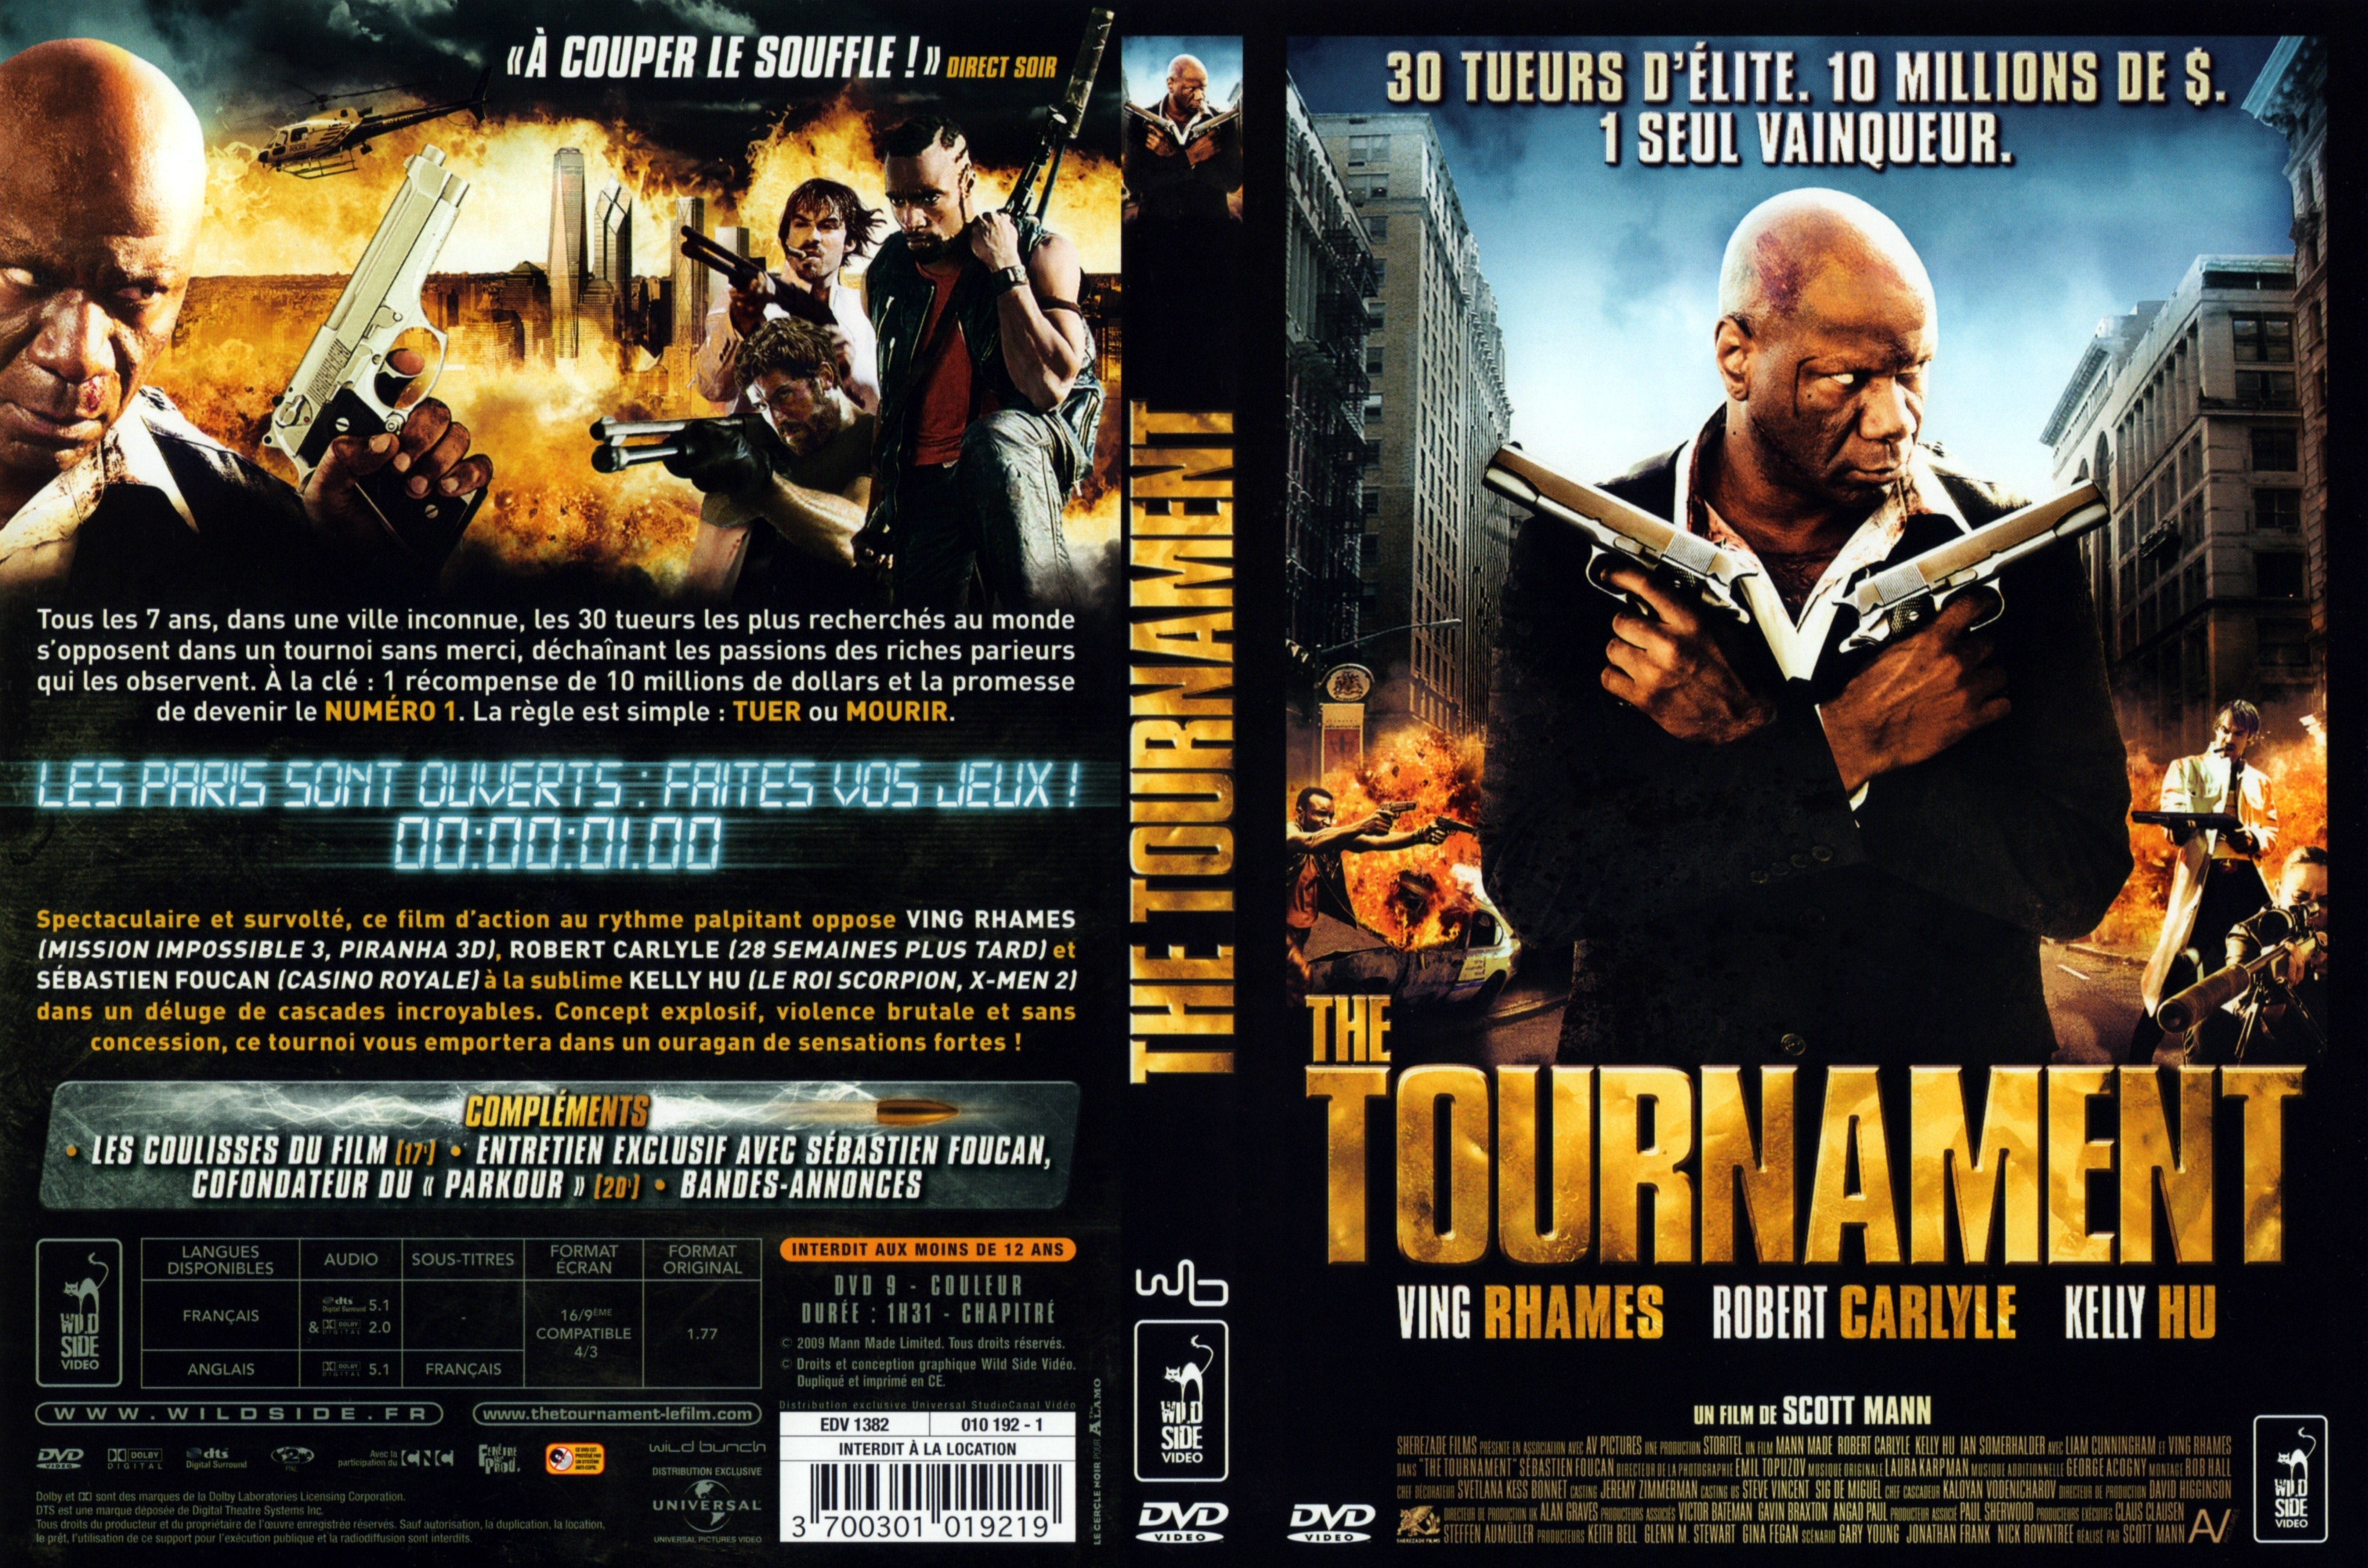 http://www.cinemapassion.com/covers_temp/covers3/The_tournament-16151310012011.jpg